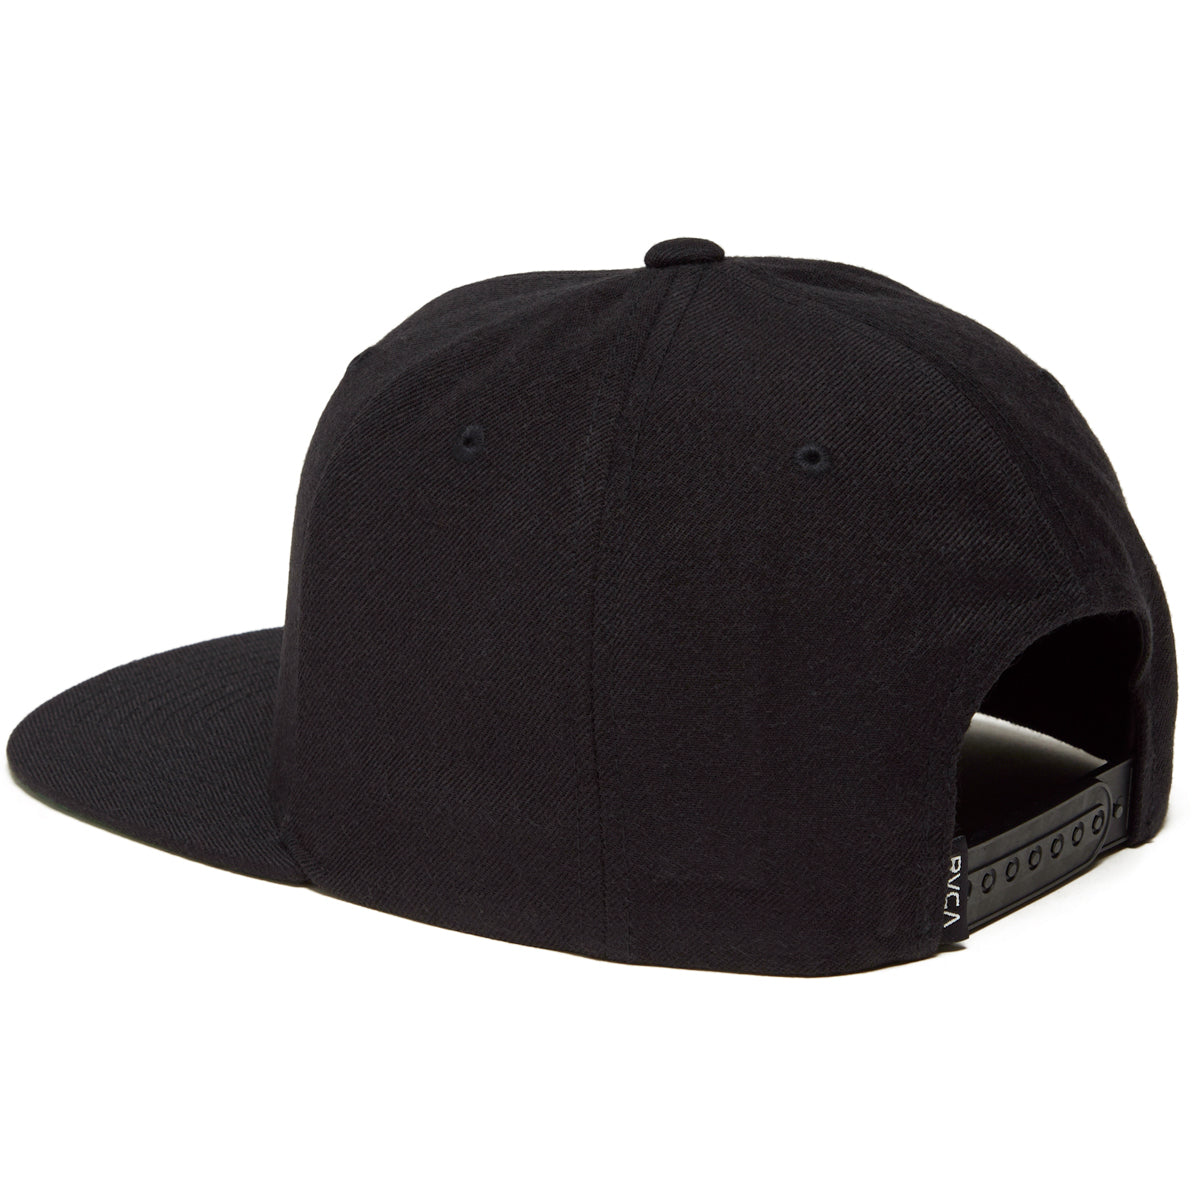 RVCA Va Patch Snapback Hat - Black image 2